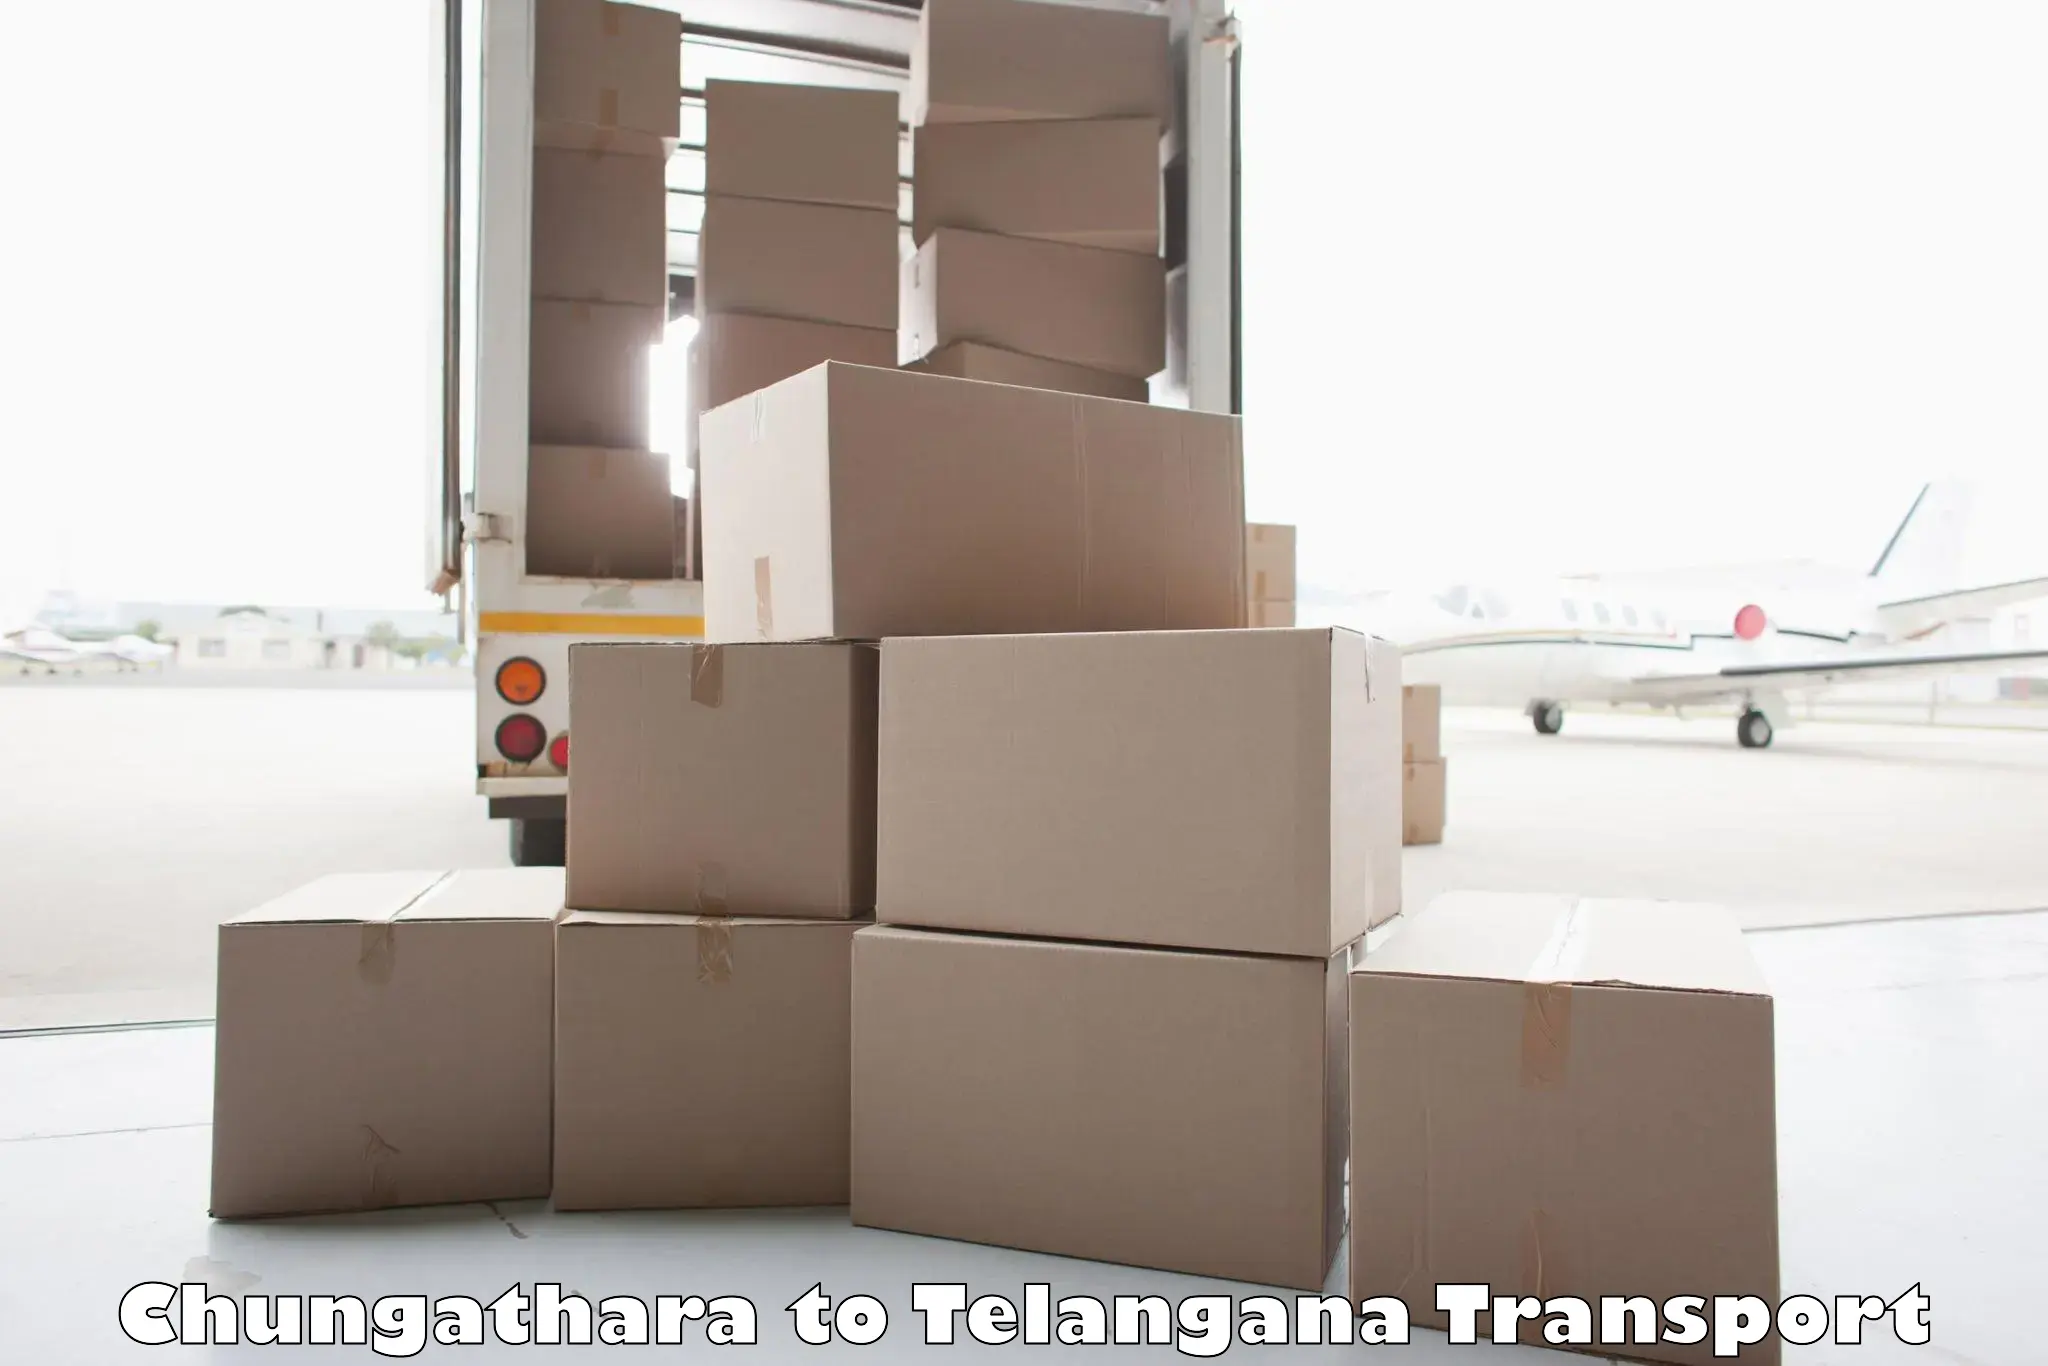 Shipping partner Chungathara to Ichoda